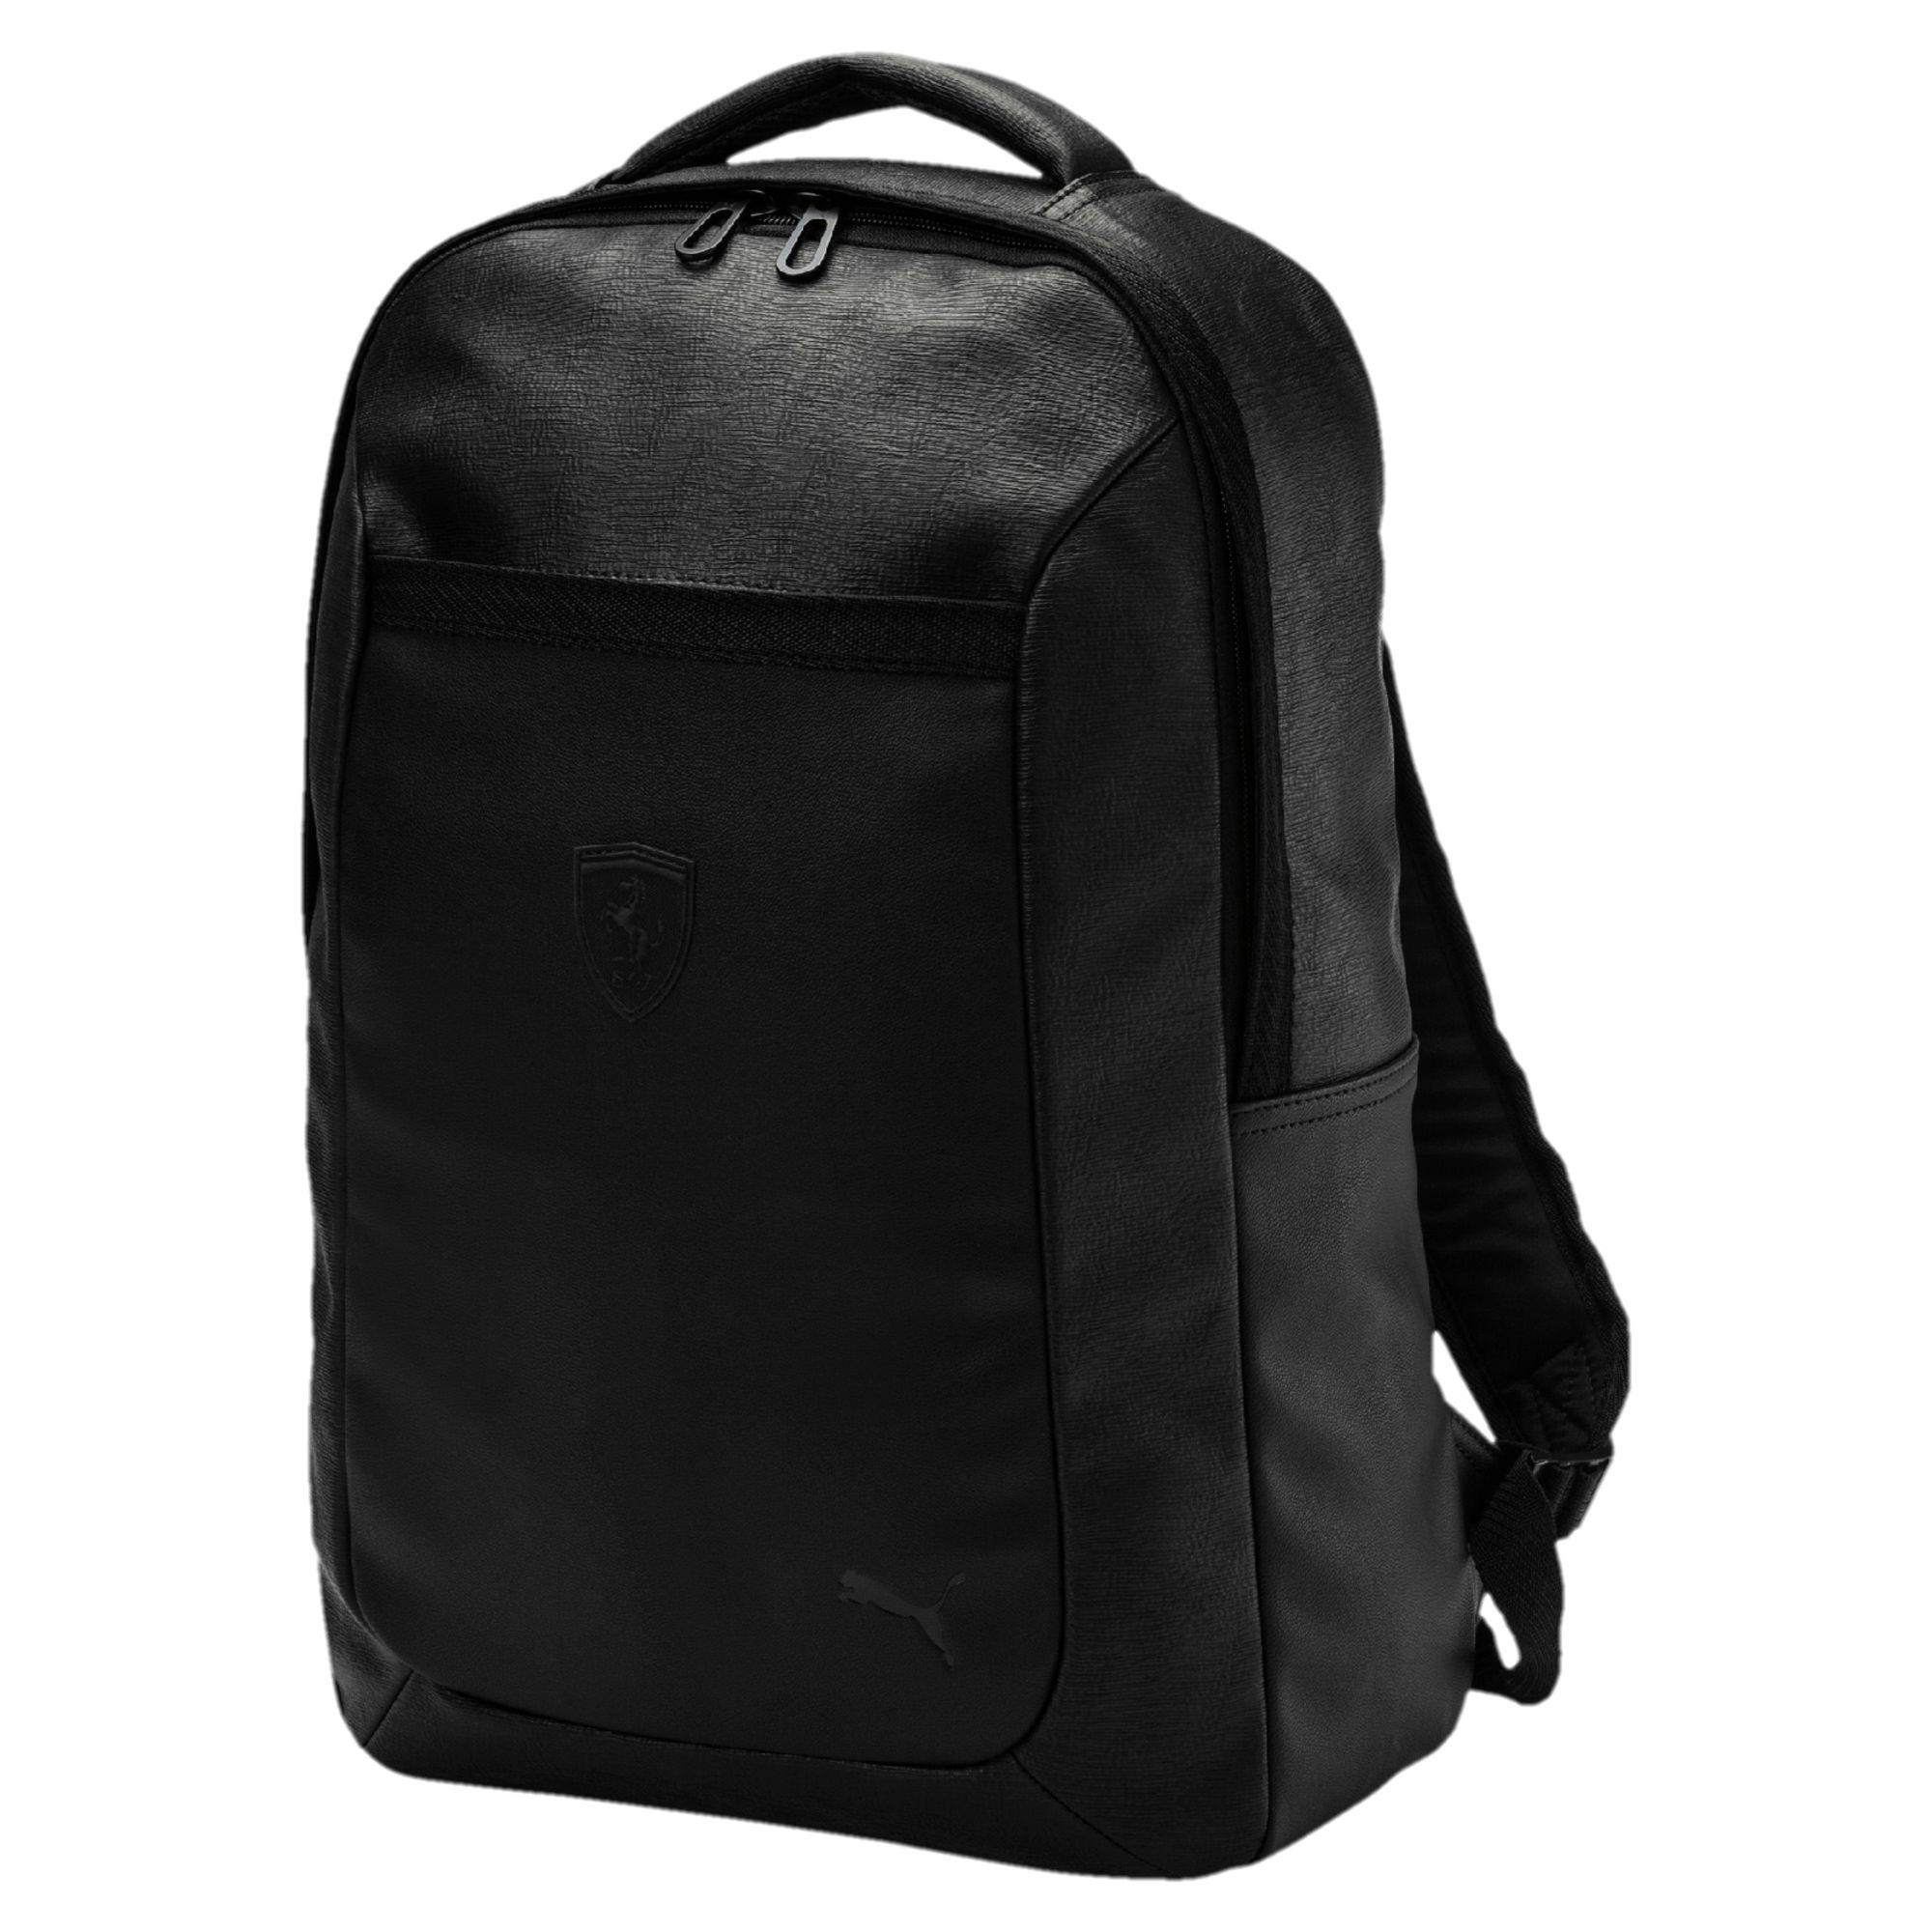 puma black leather backpack